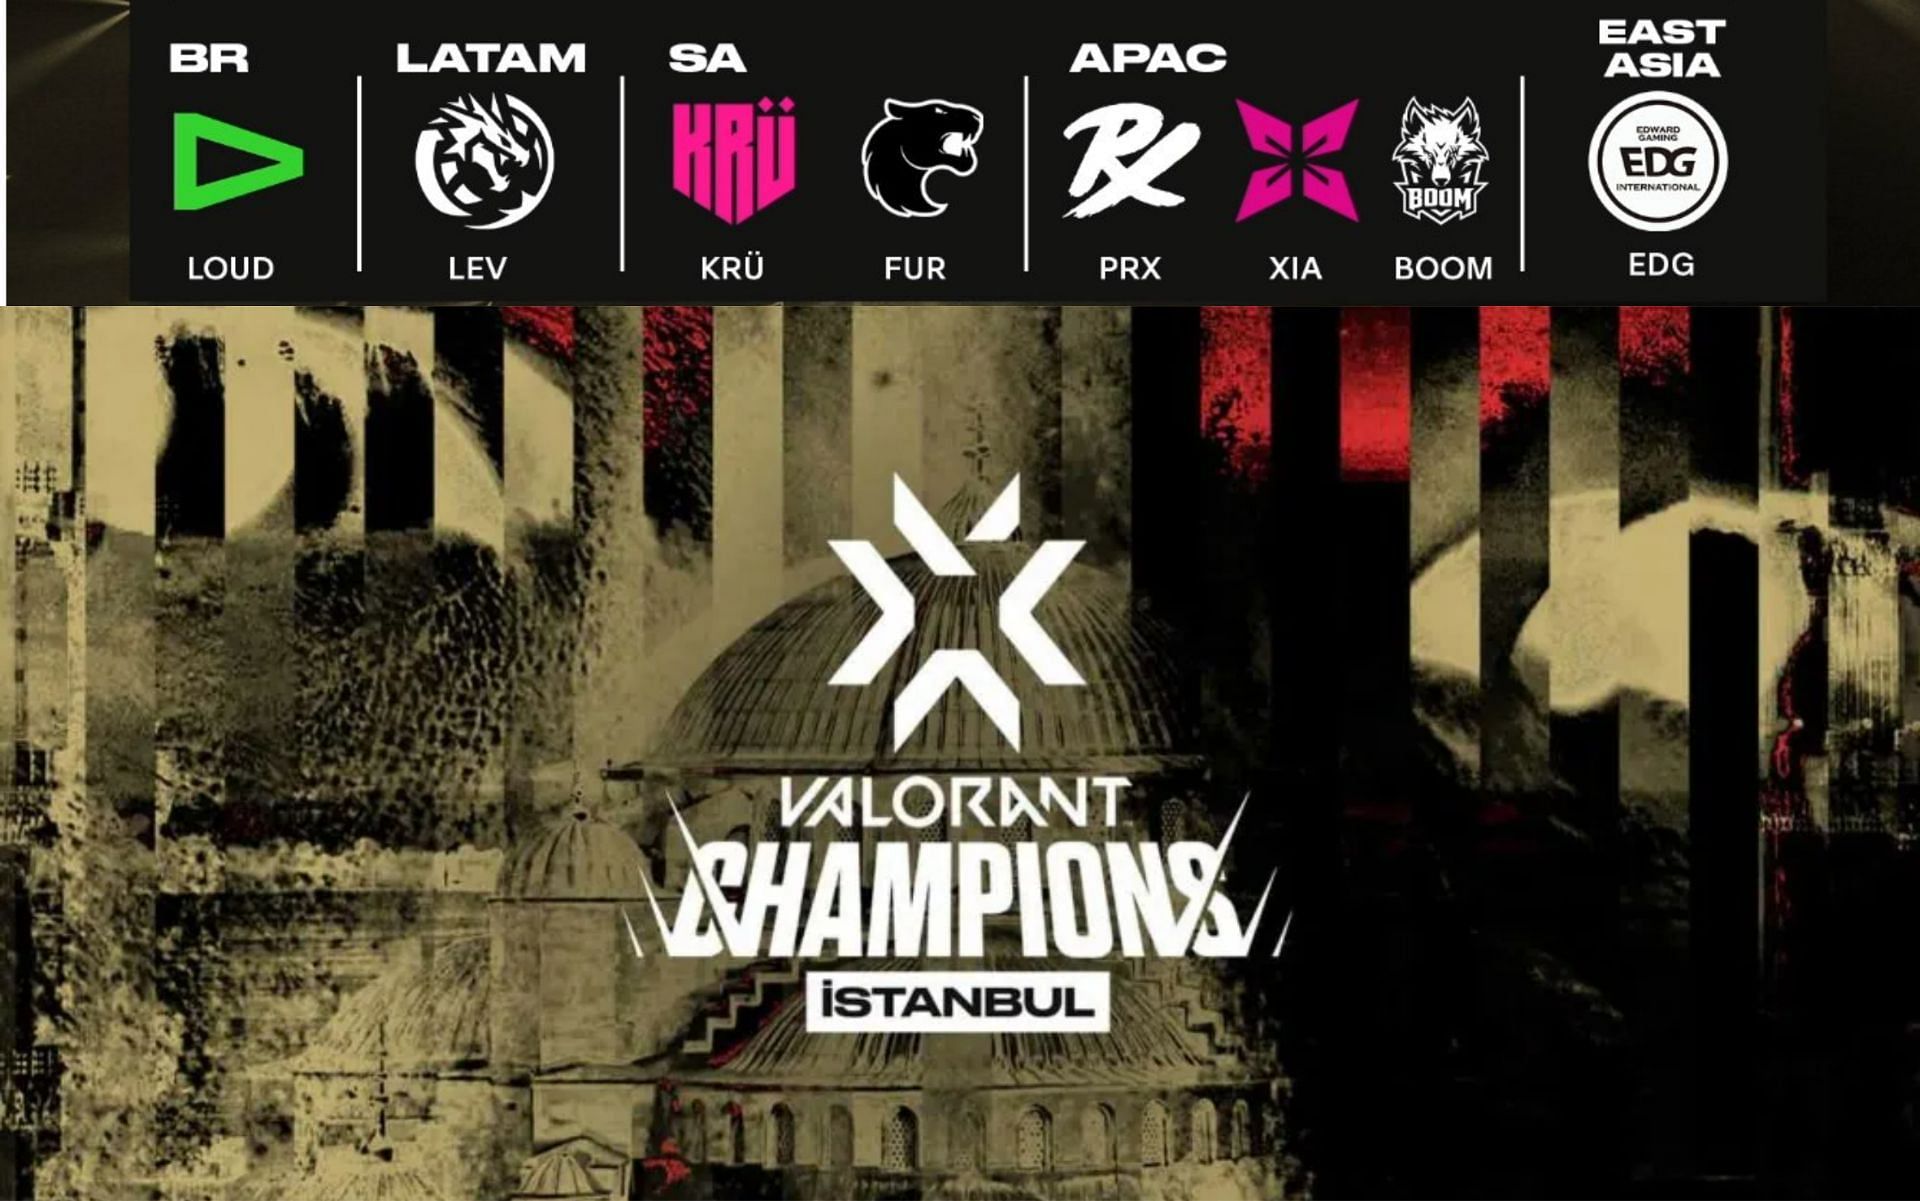 Teams qualified for Valorant Champions 2022 (Image via Sportskeeda)